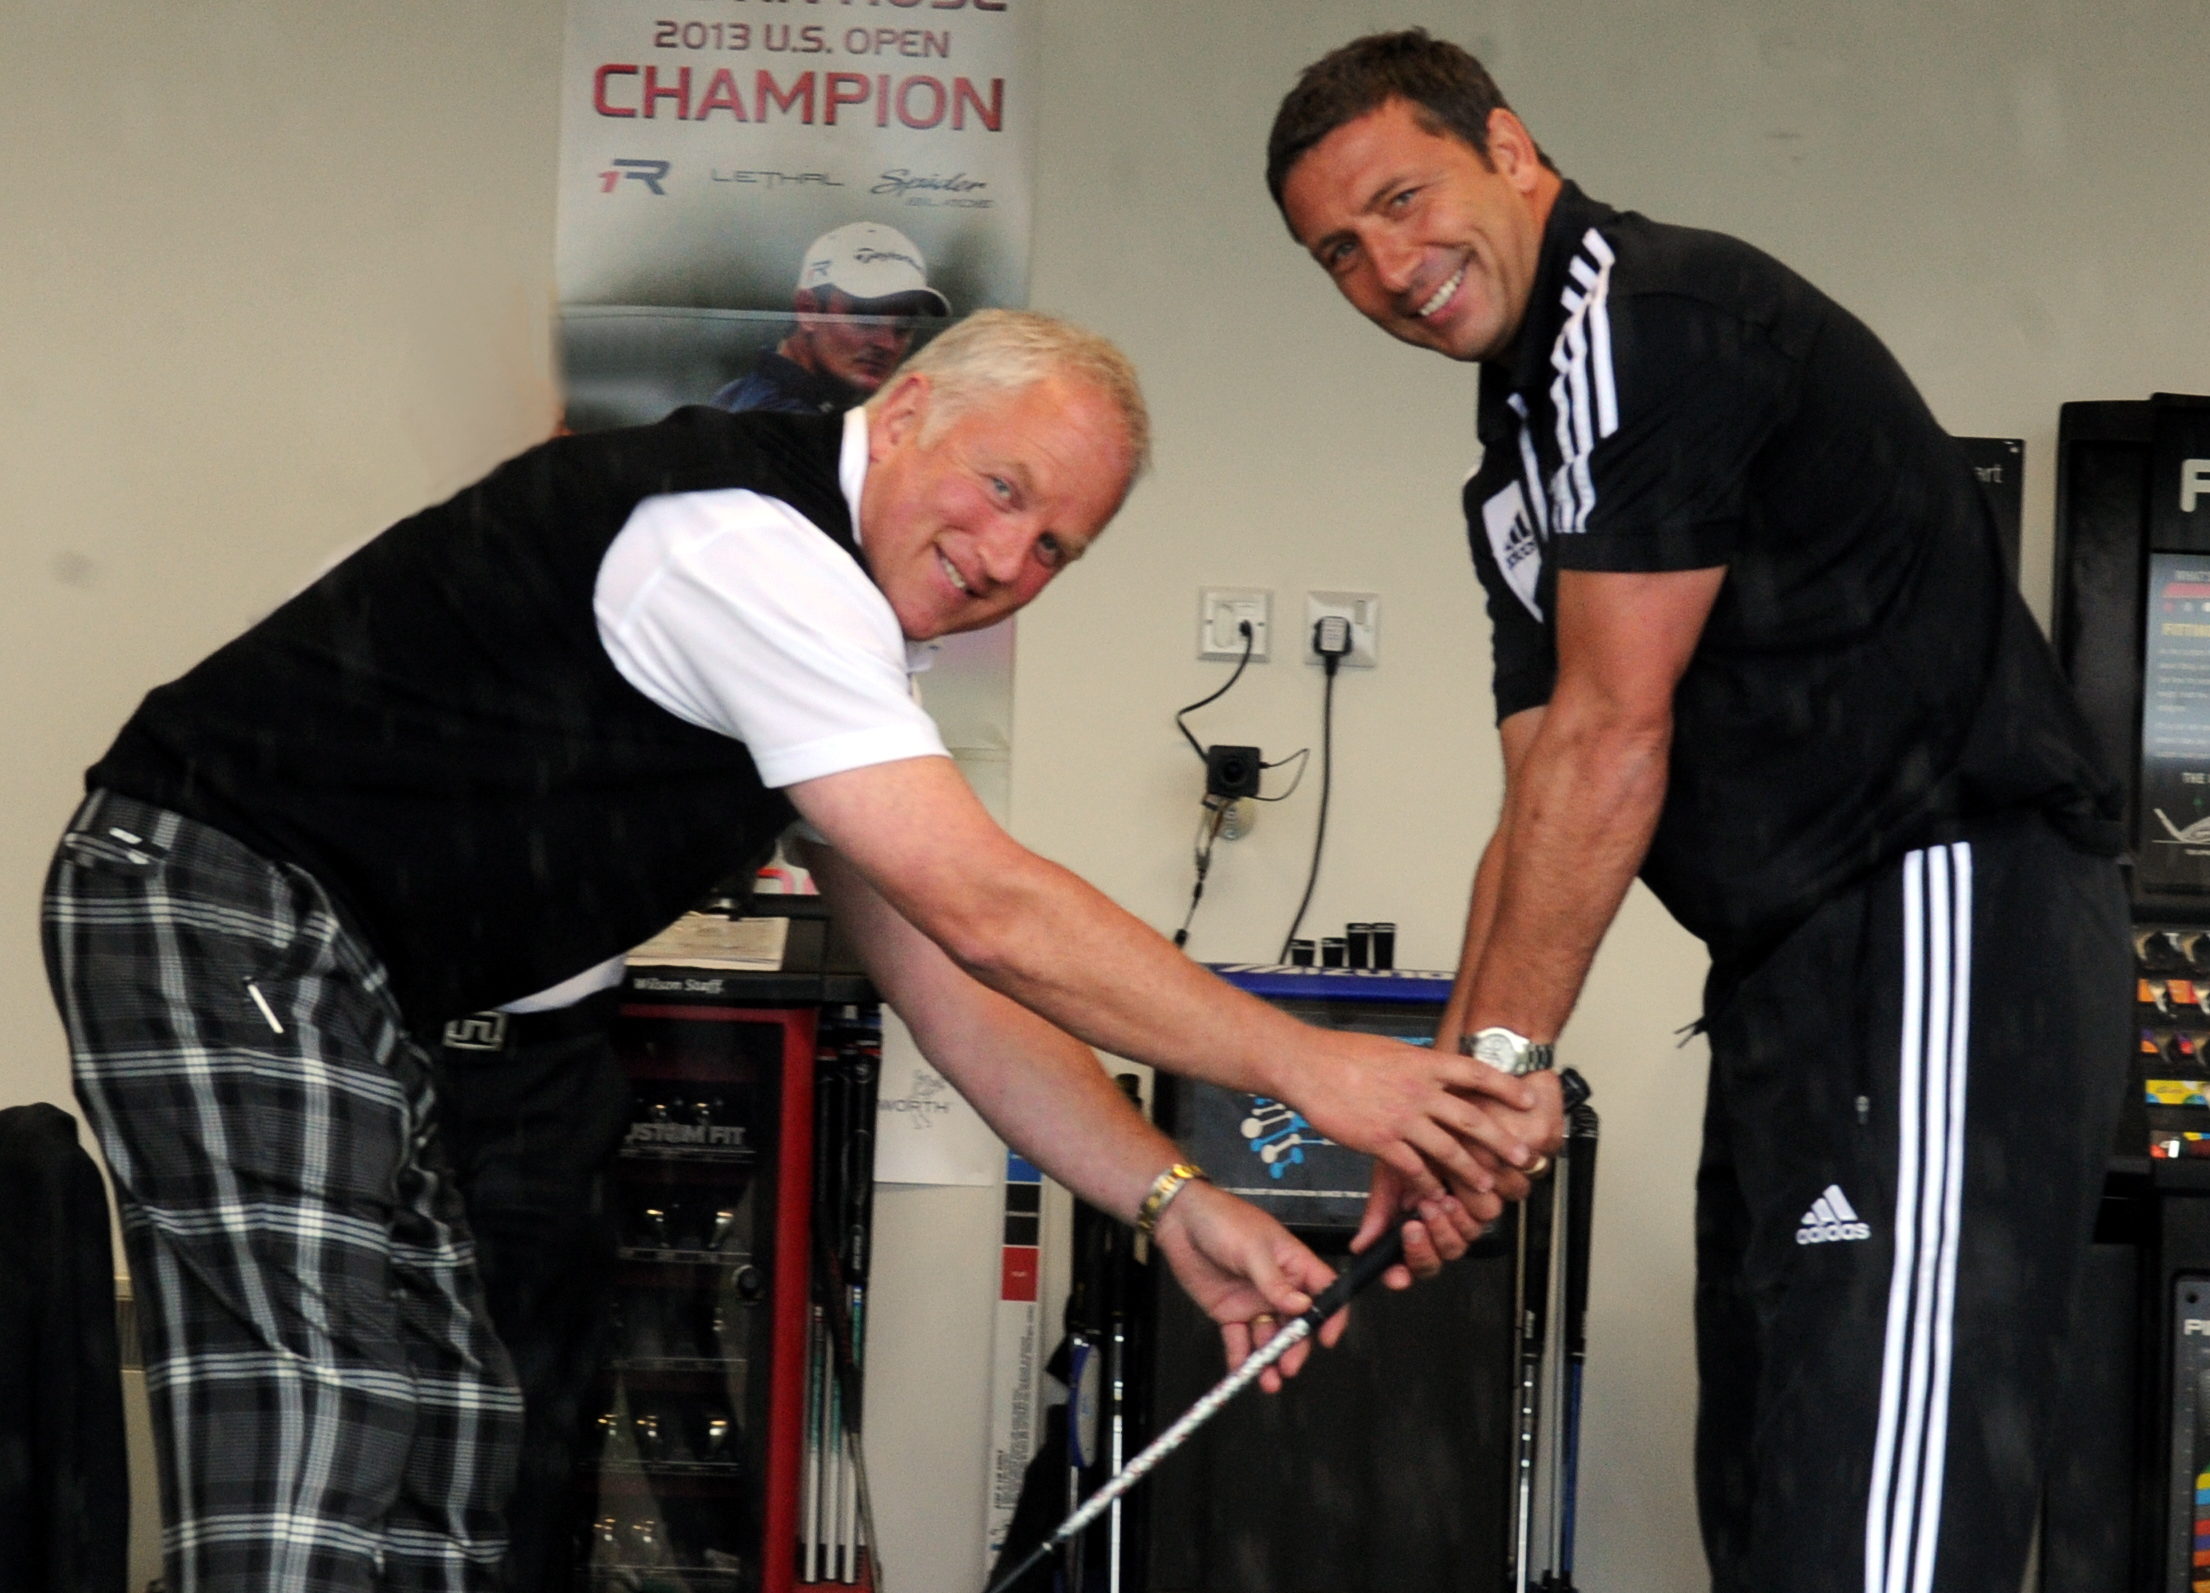 Paul Girvan helping Aberdeen manager Derek McInnes with his swing. 
Picture by Jim Irvine